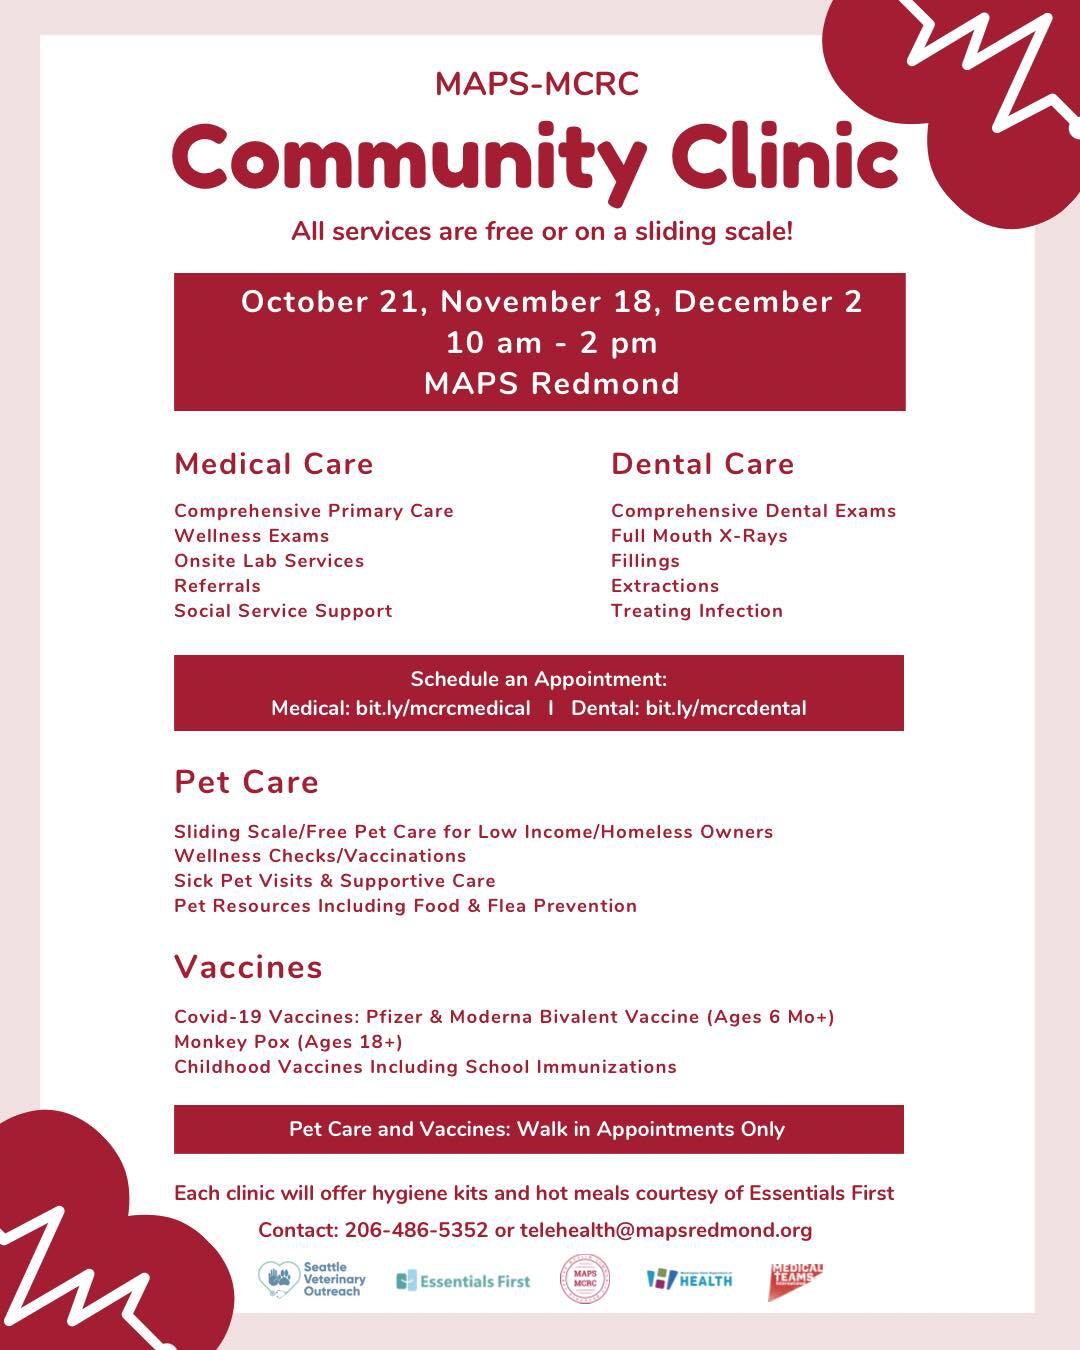 MAPS-MCRC community clinic flyer